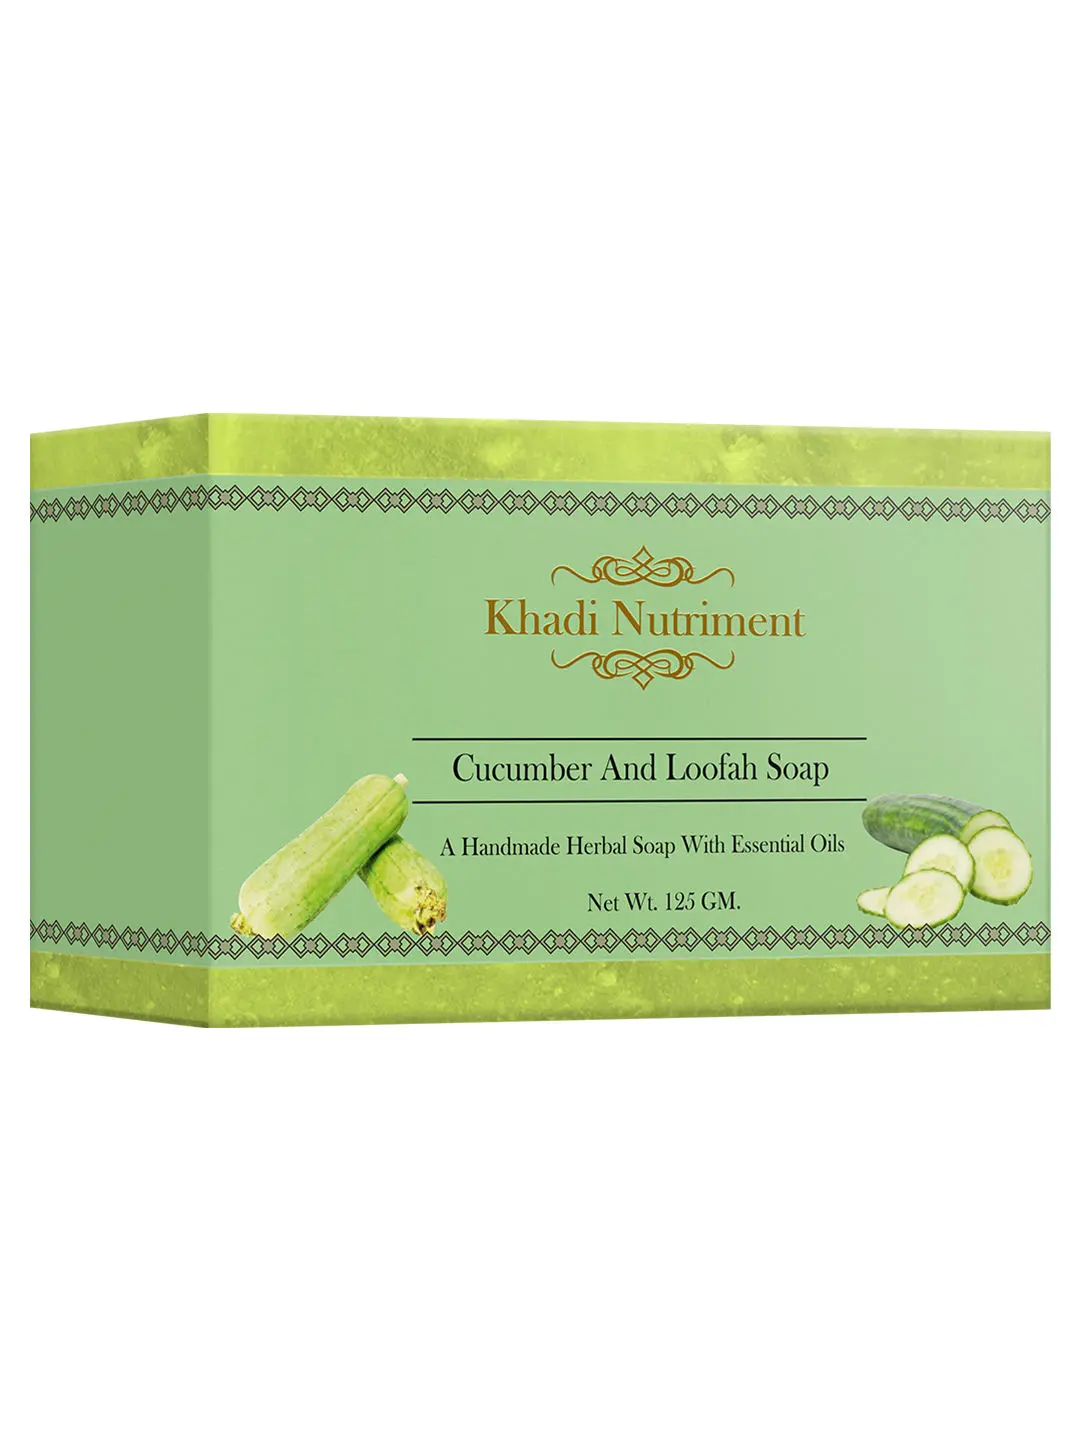 Khadi Nutriment Cucumber Soap,125 gm Soap for Unisex (Pack of 1)